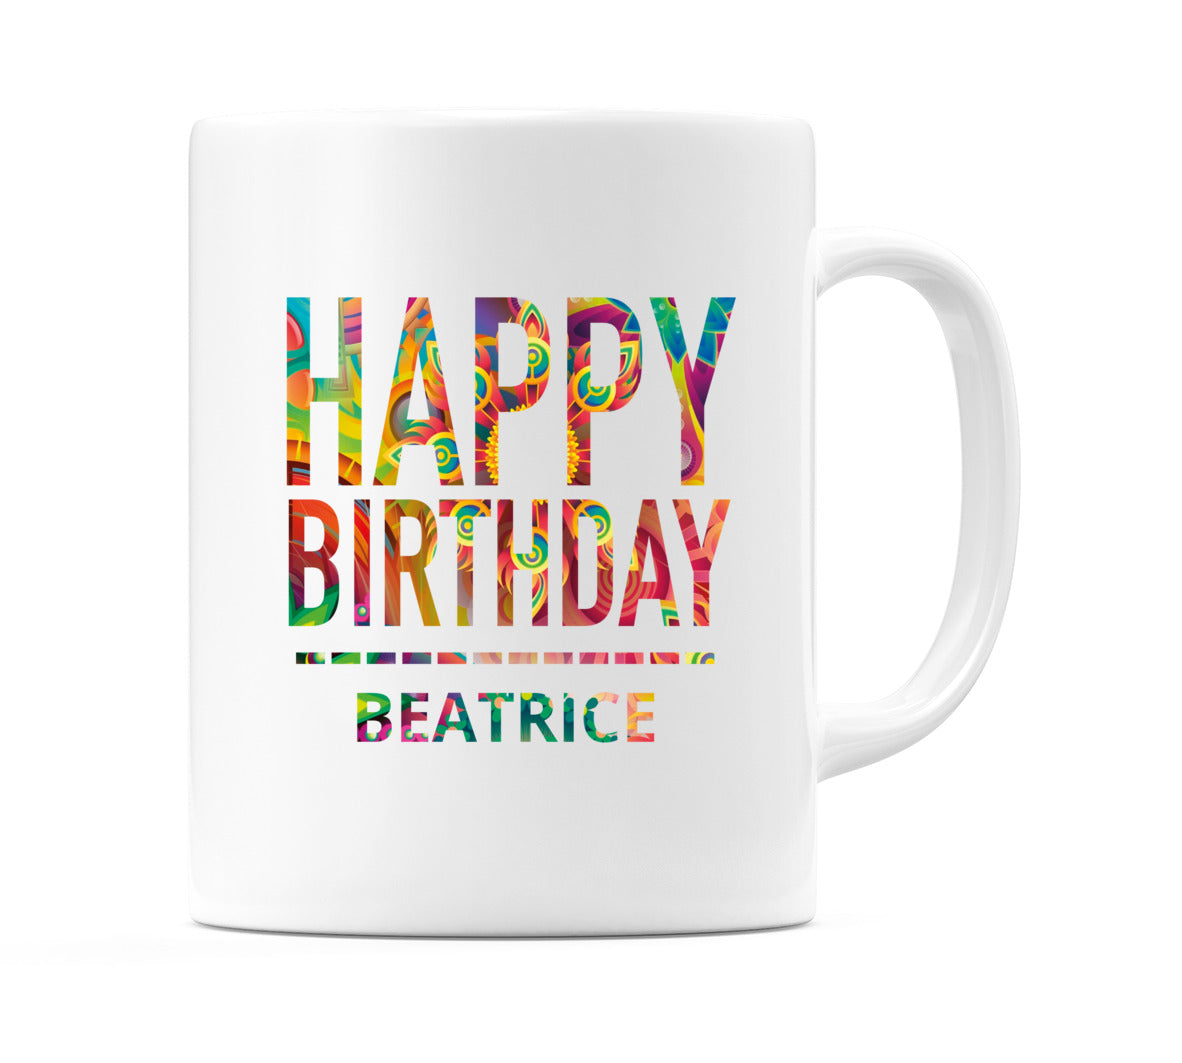 Happy Birthday Beatrice (Tie Dye Effect) Mug Cup by WeDoMugs